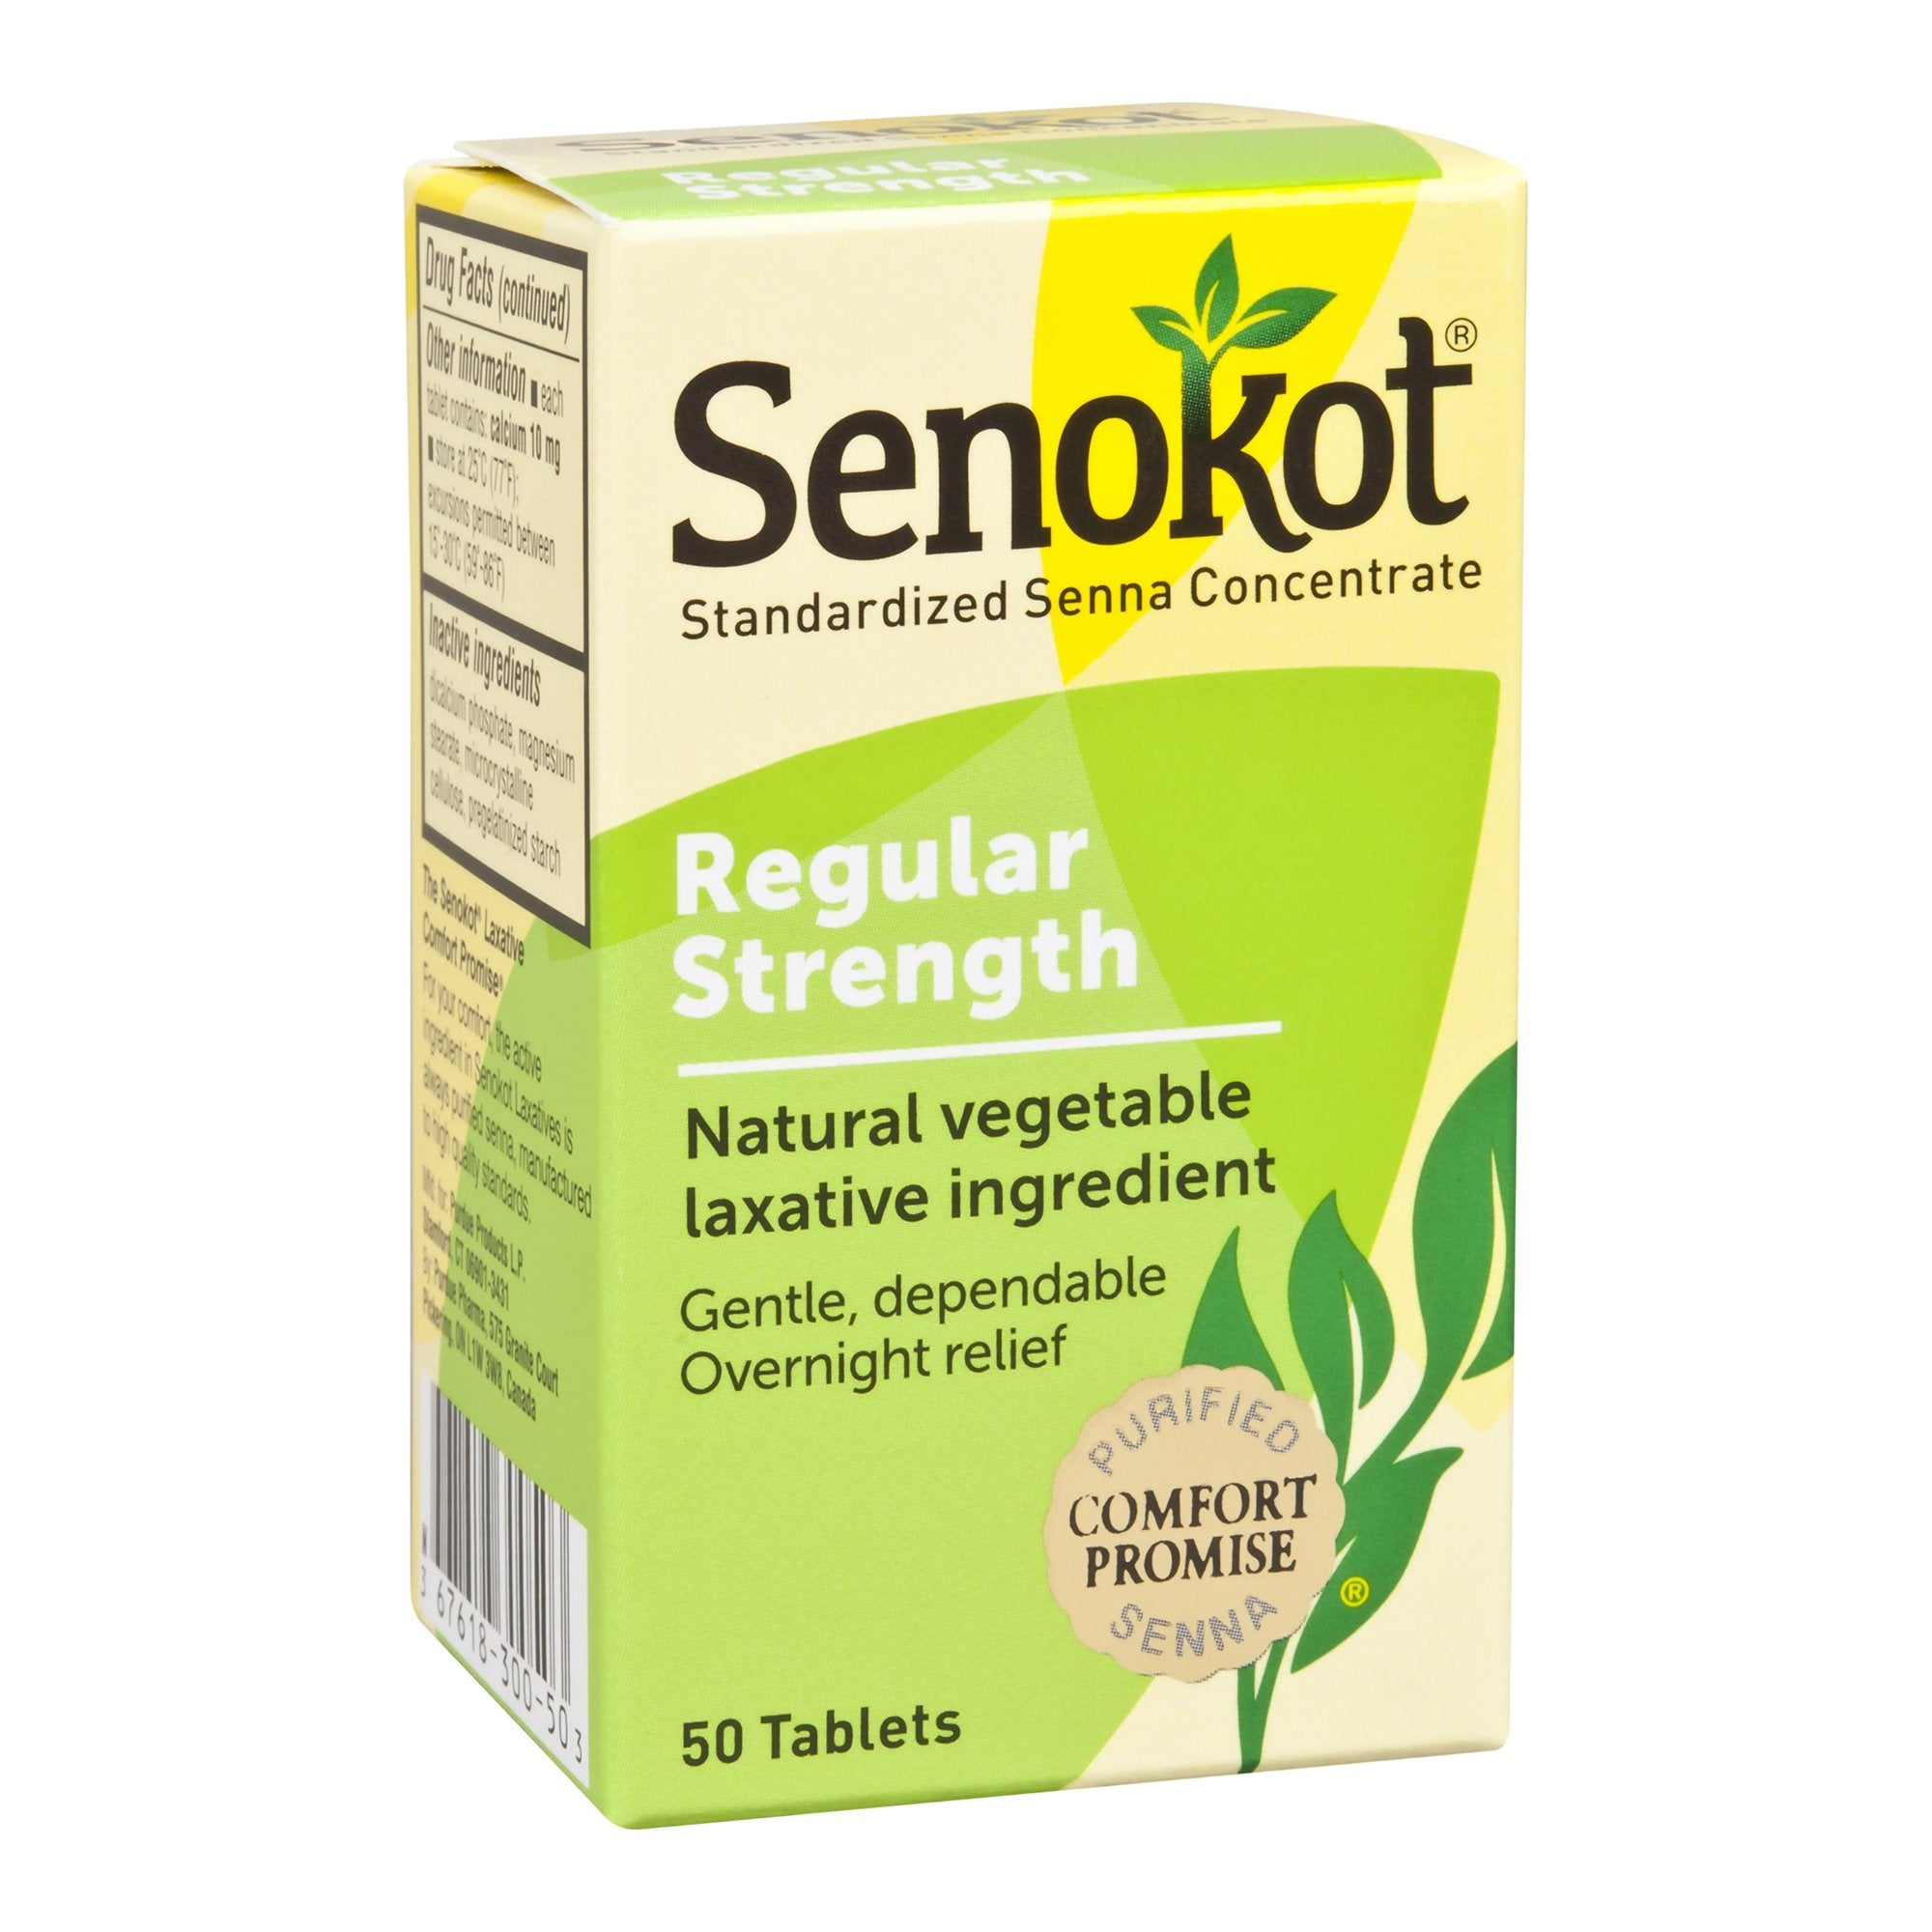 Laxative Senokot Tablet 50 per Bottle 8.6 mg Strength Sennosides